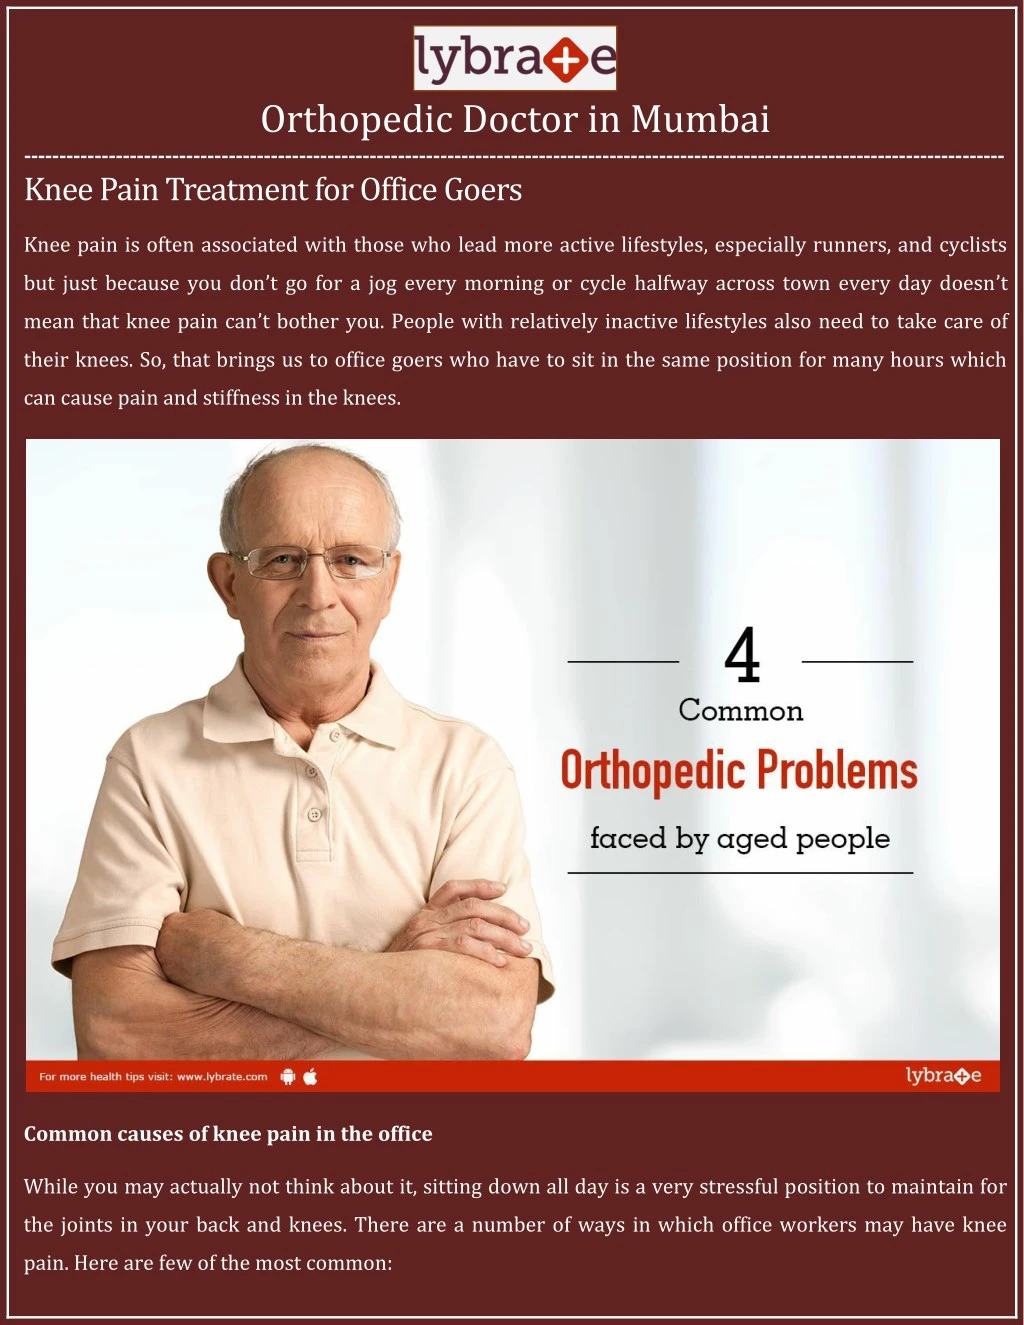 orthopedic doctor in mumbai knee pain treatment